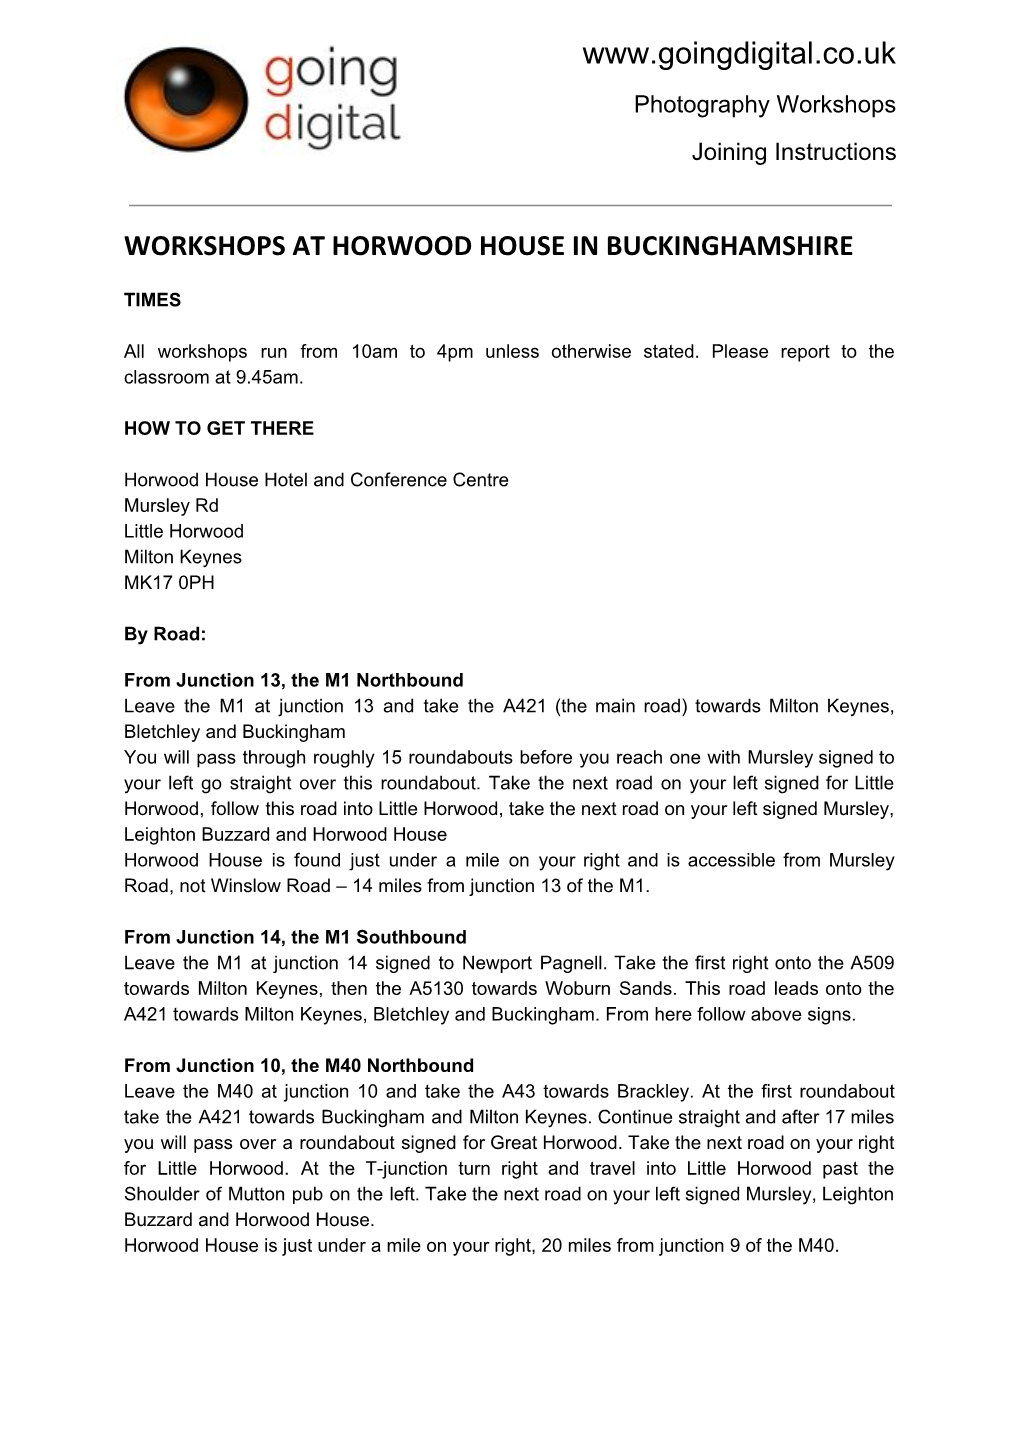 Workshops at Horwood House in Buckinghamshire